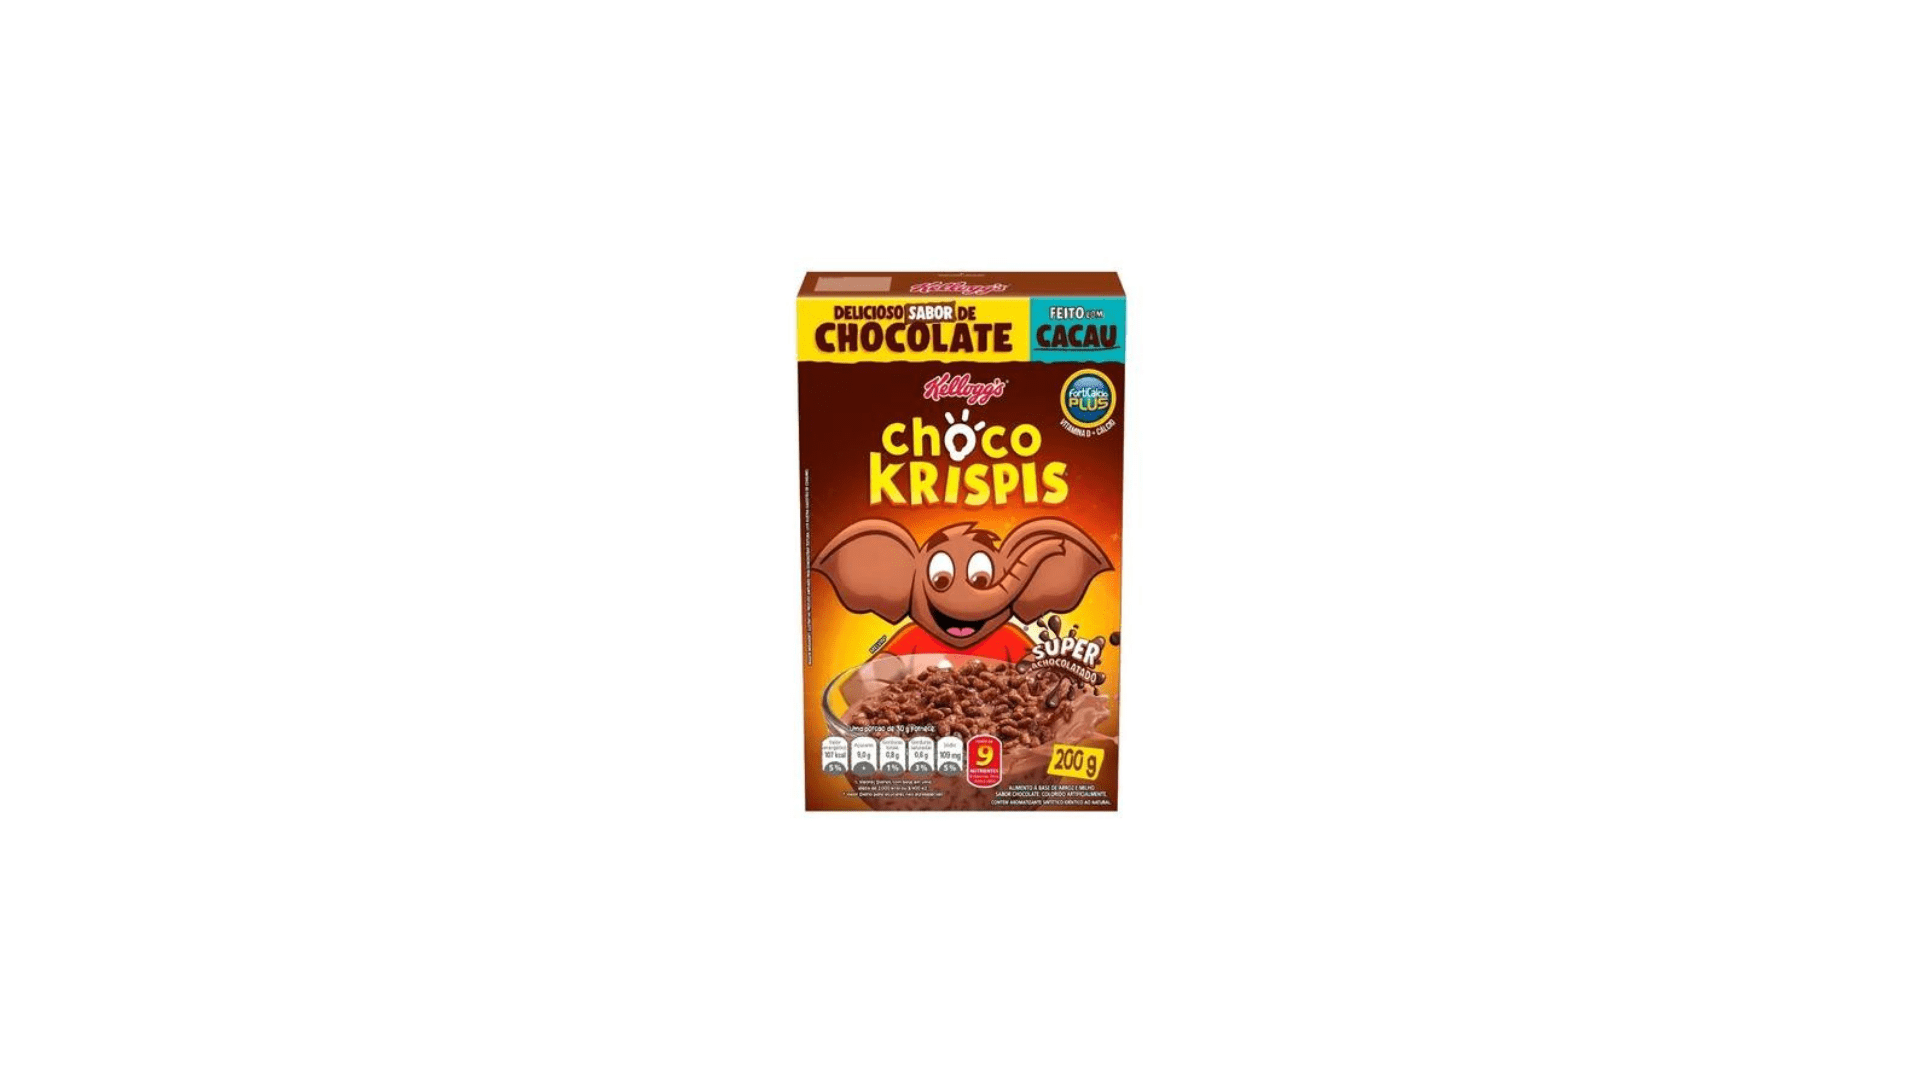 Featured image for “Choco Krispis volta ao mercado”